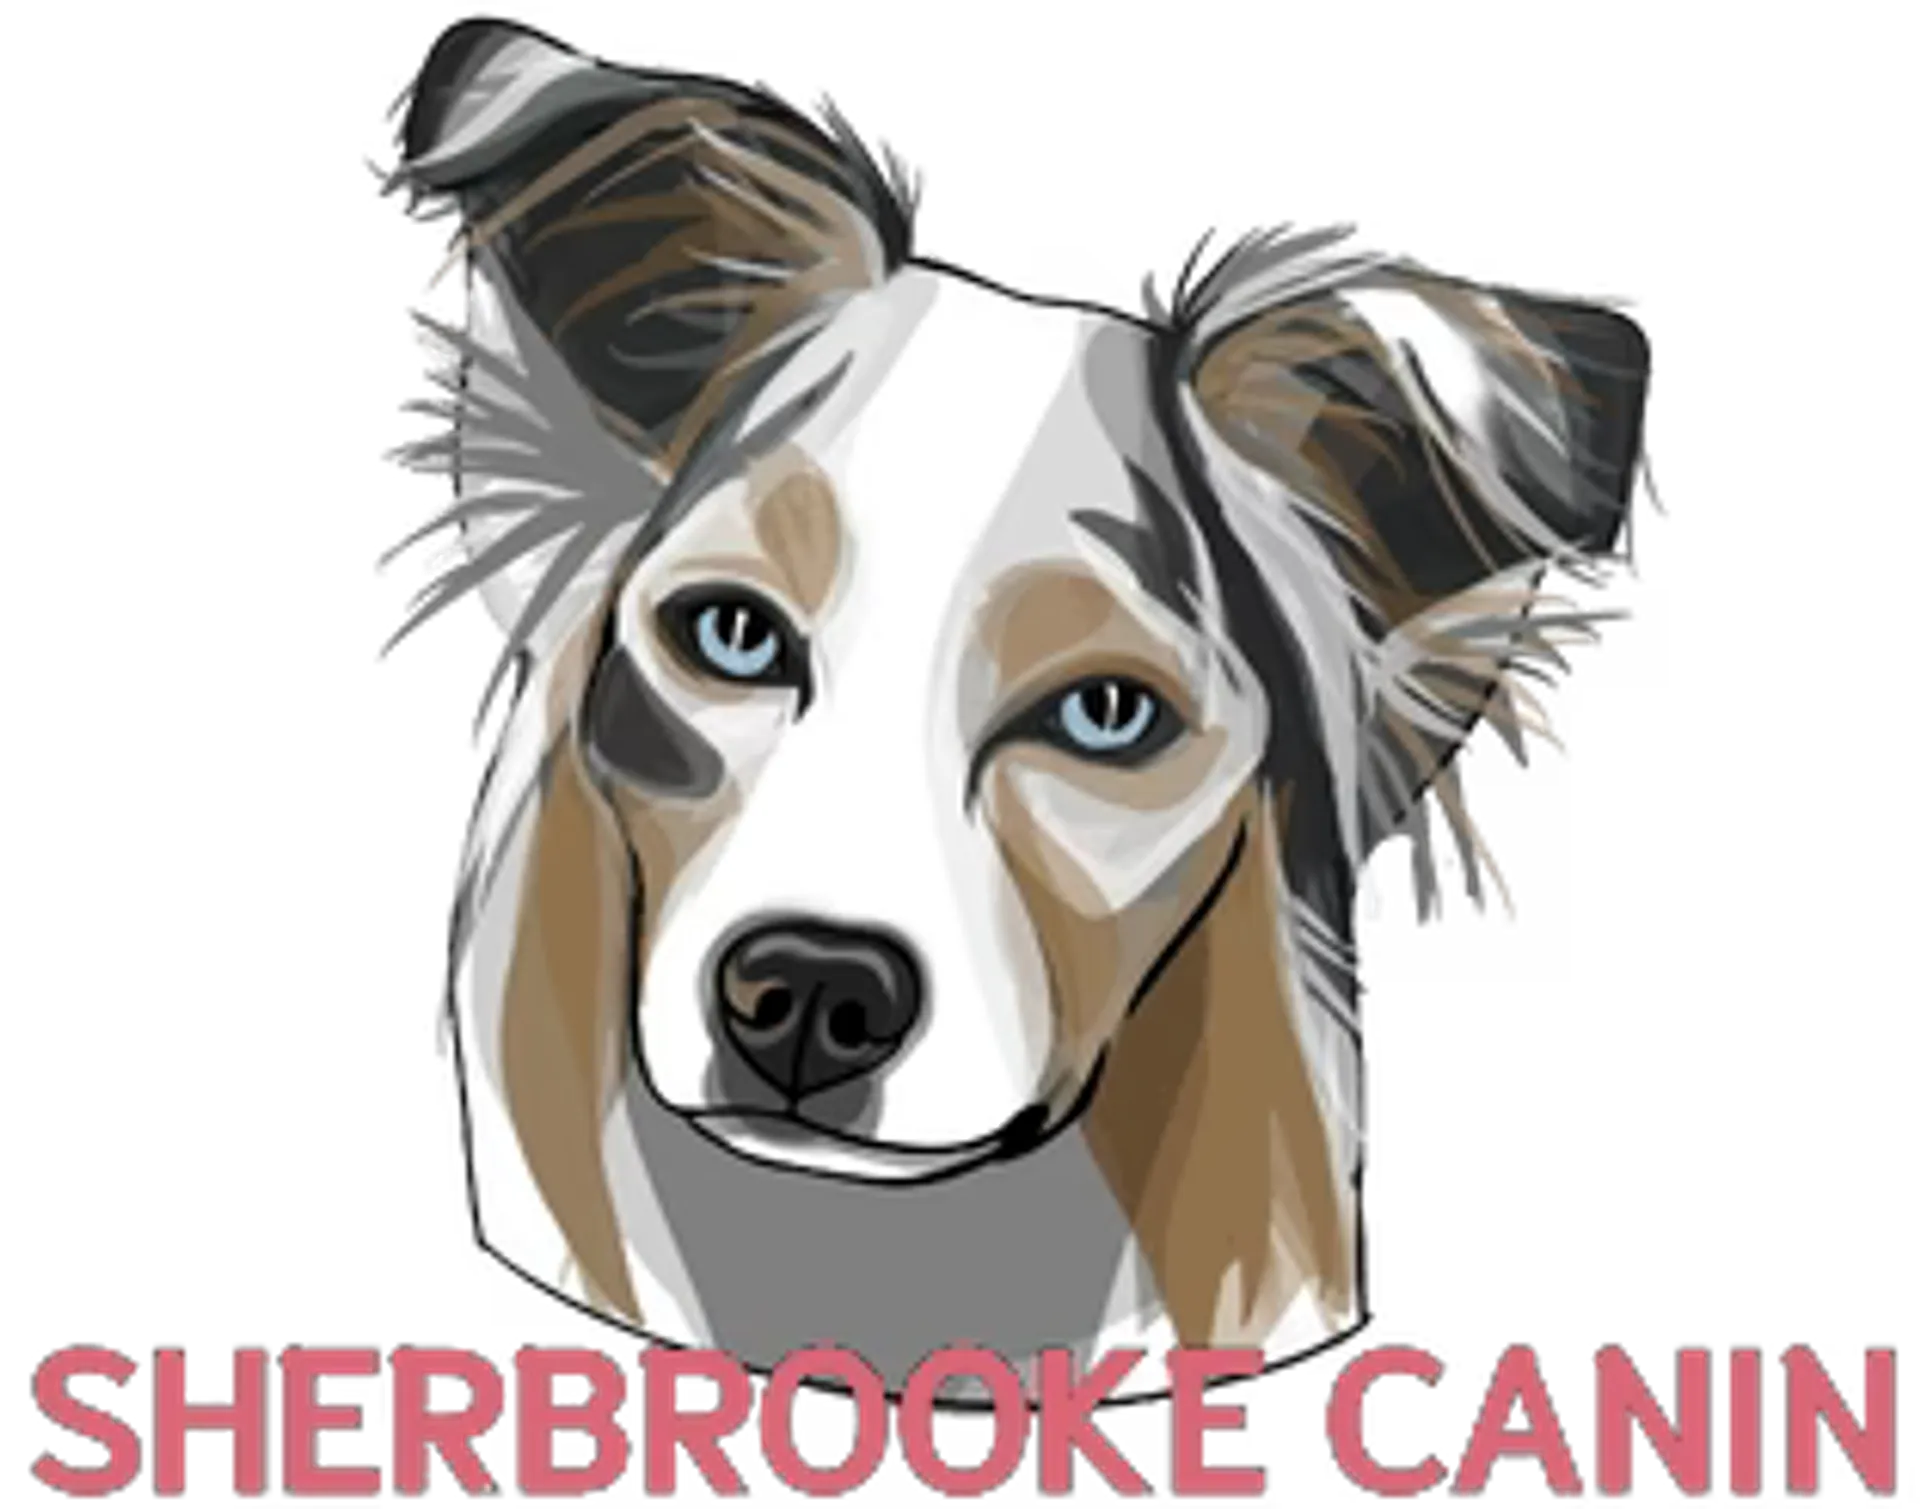 SHERBROOKE CANIN logo de circulaires